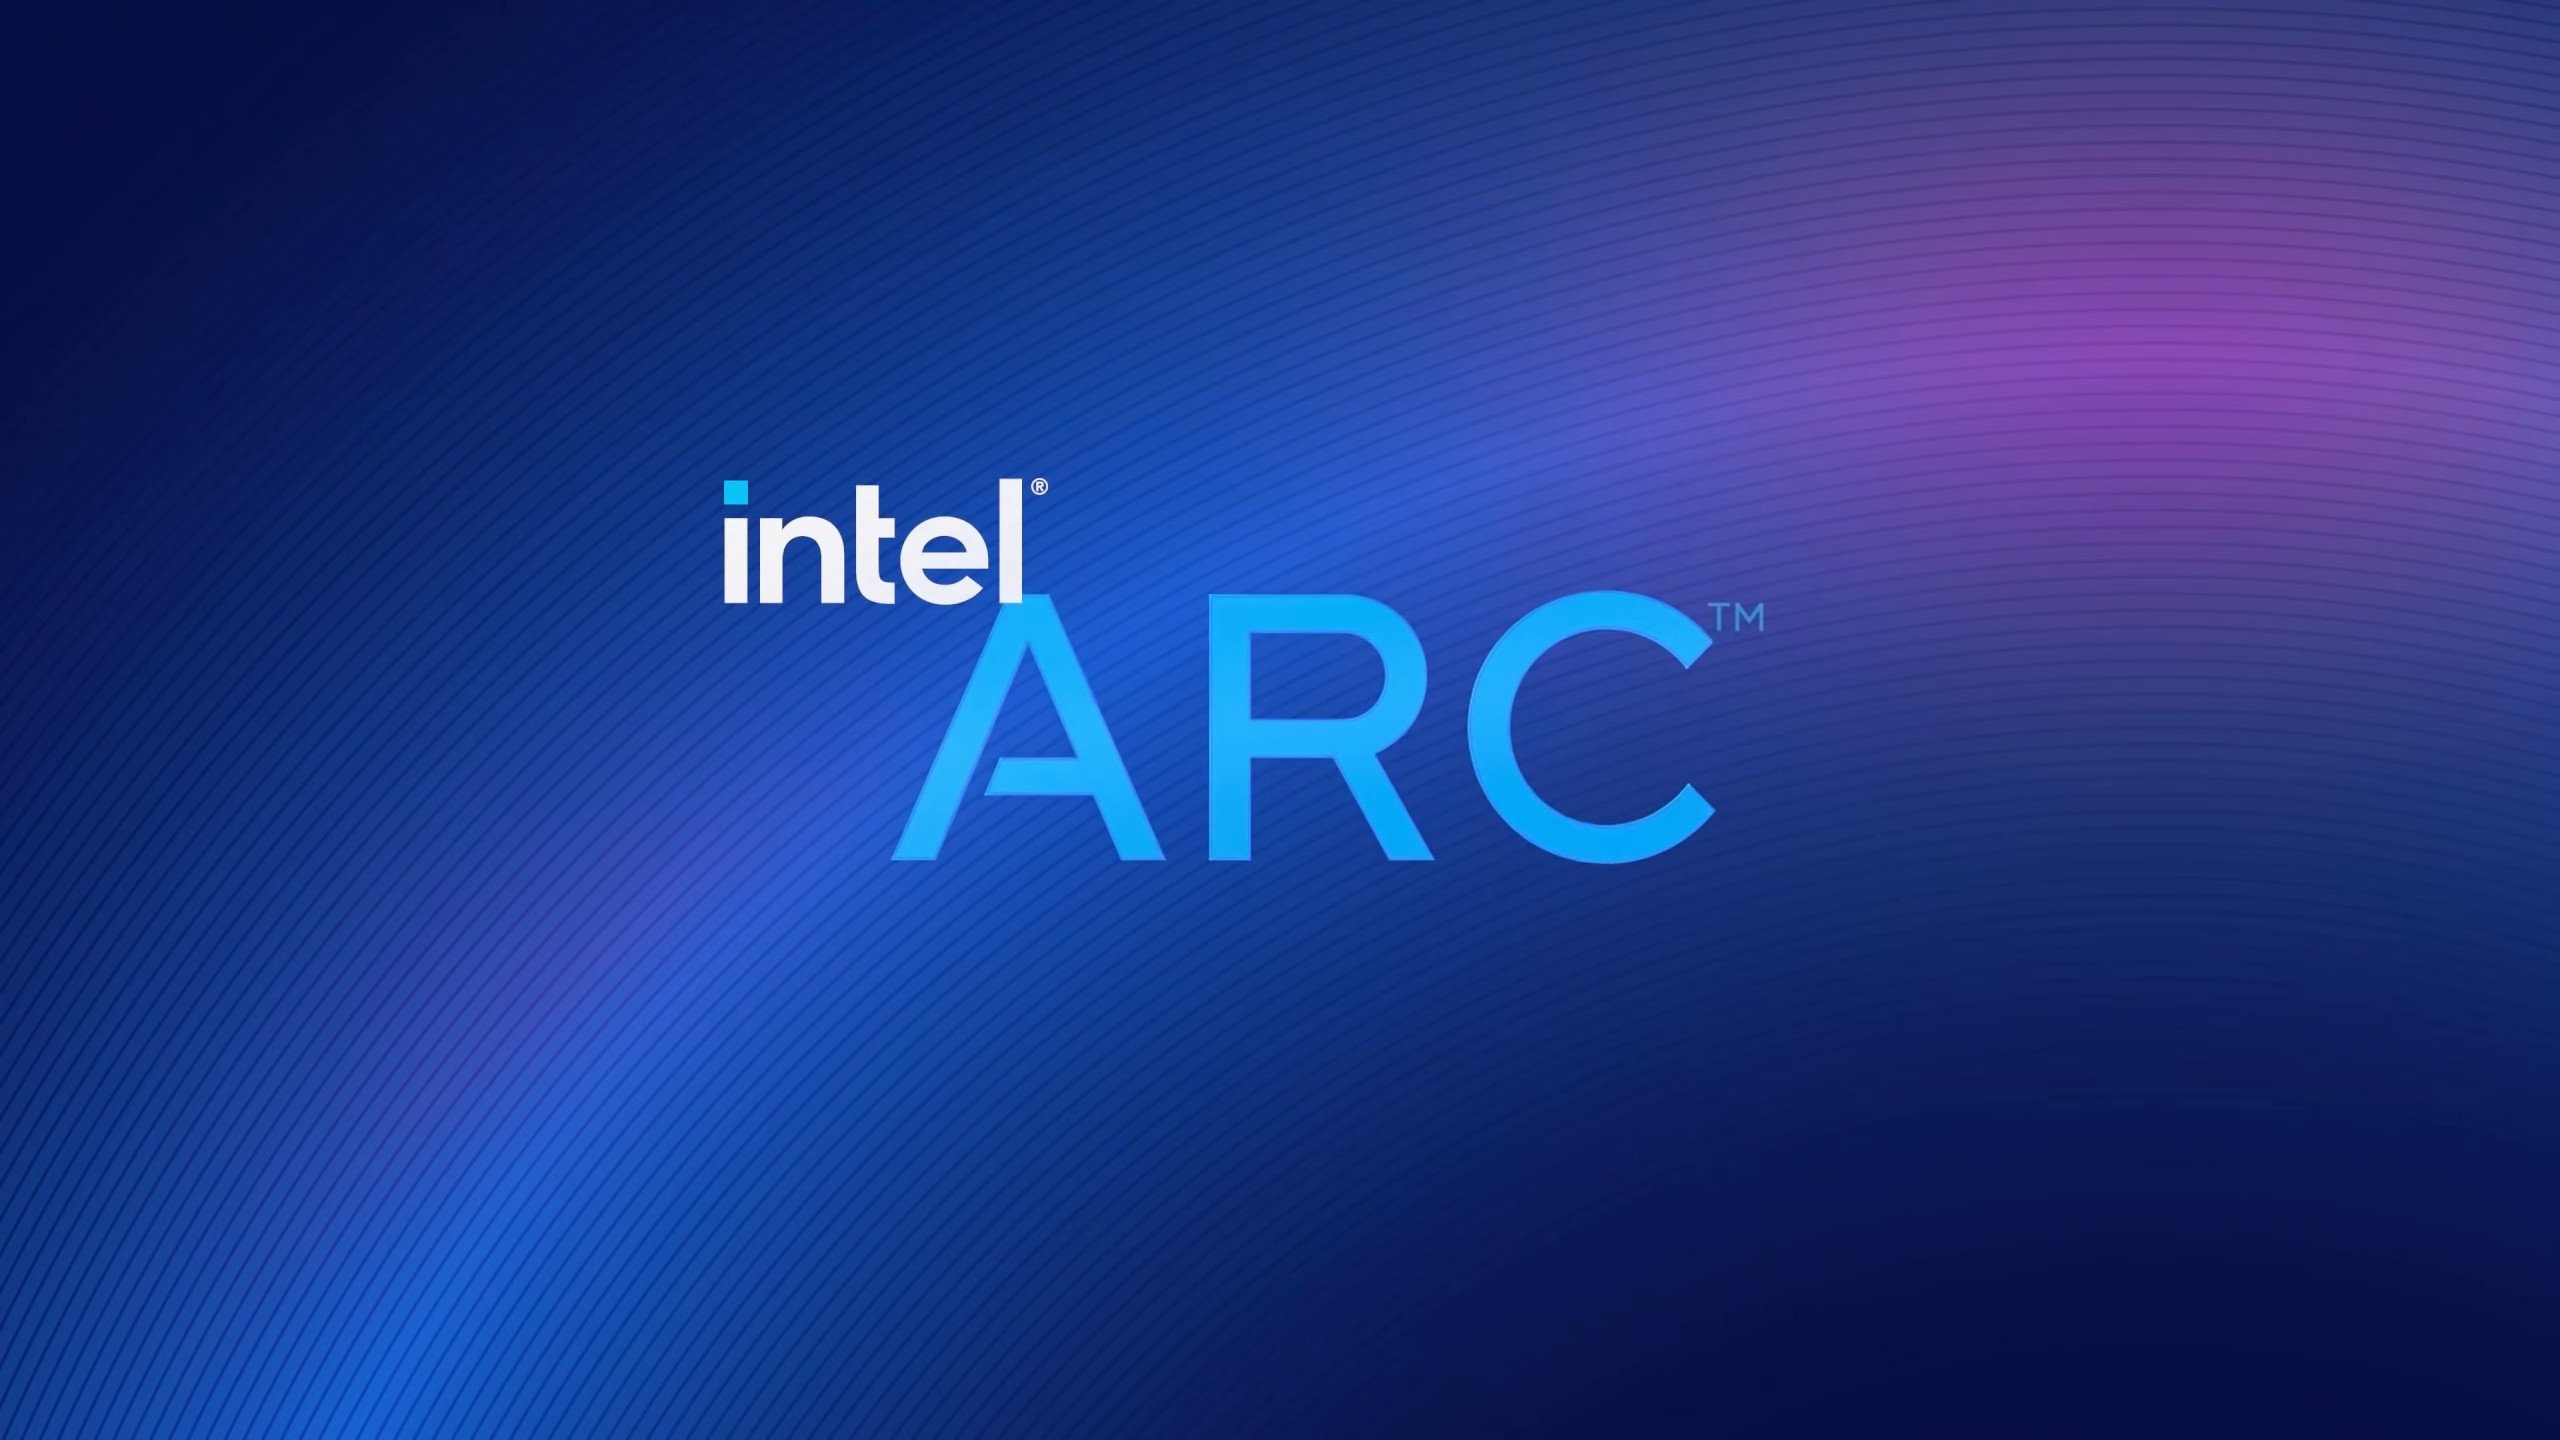 Intel arc tm. Intel Arc. Intel Arc logo. Intel® Arc™ Control. Intel Arc Graphics Card.